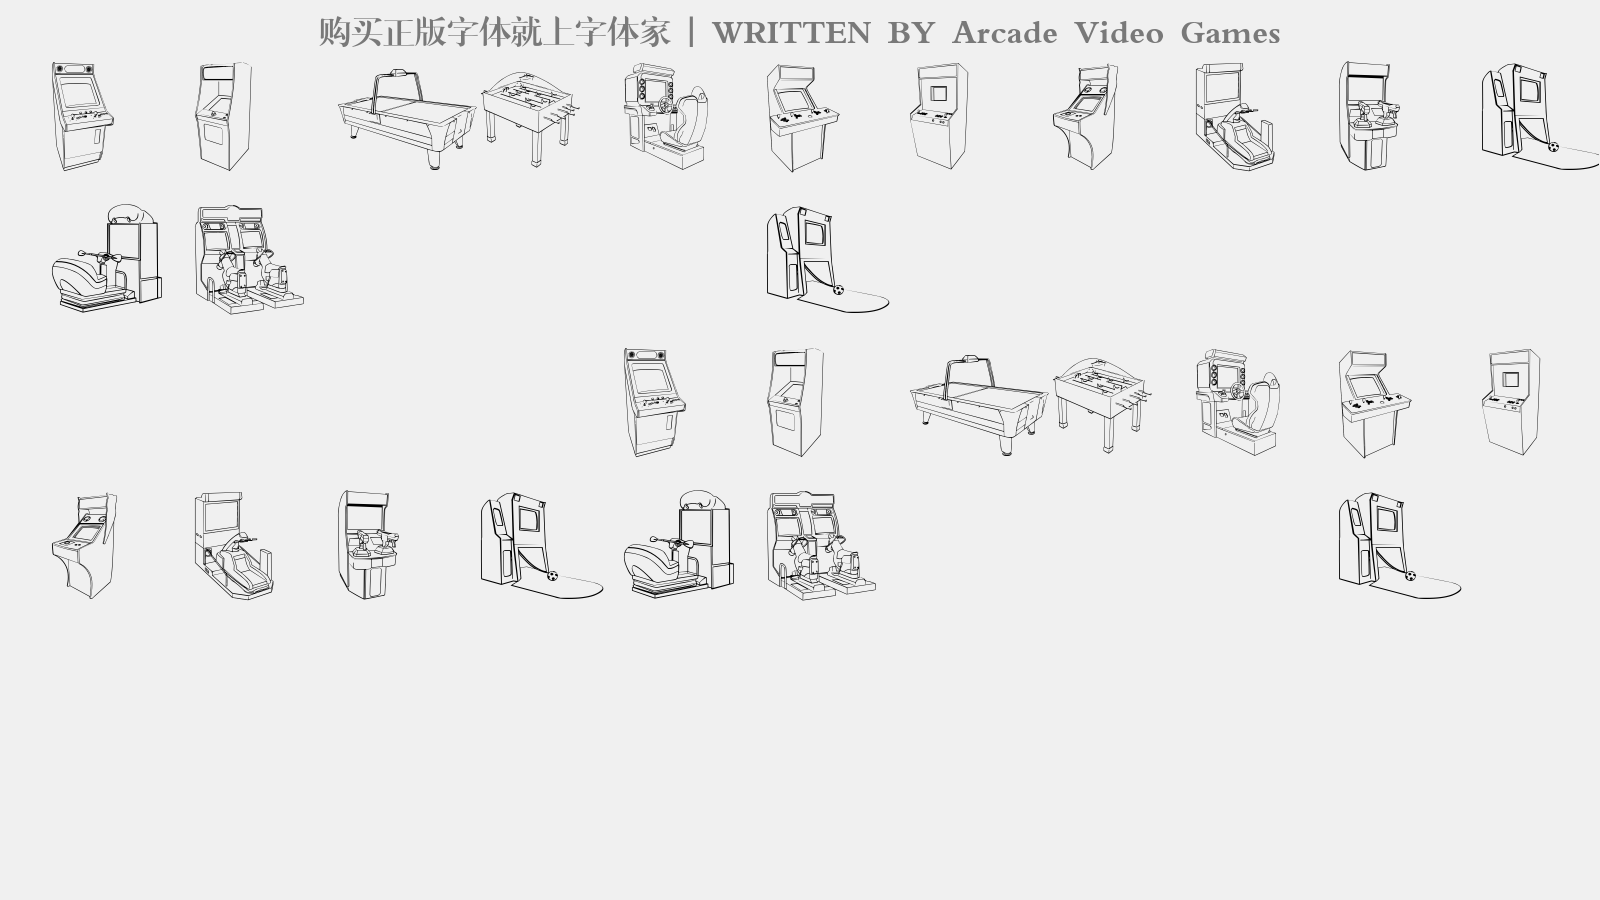 Arcade Video Games - 大写字母/小写字母/数字